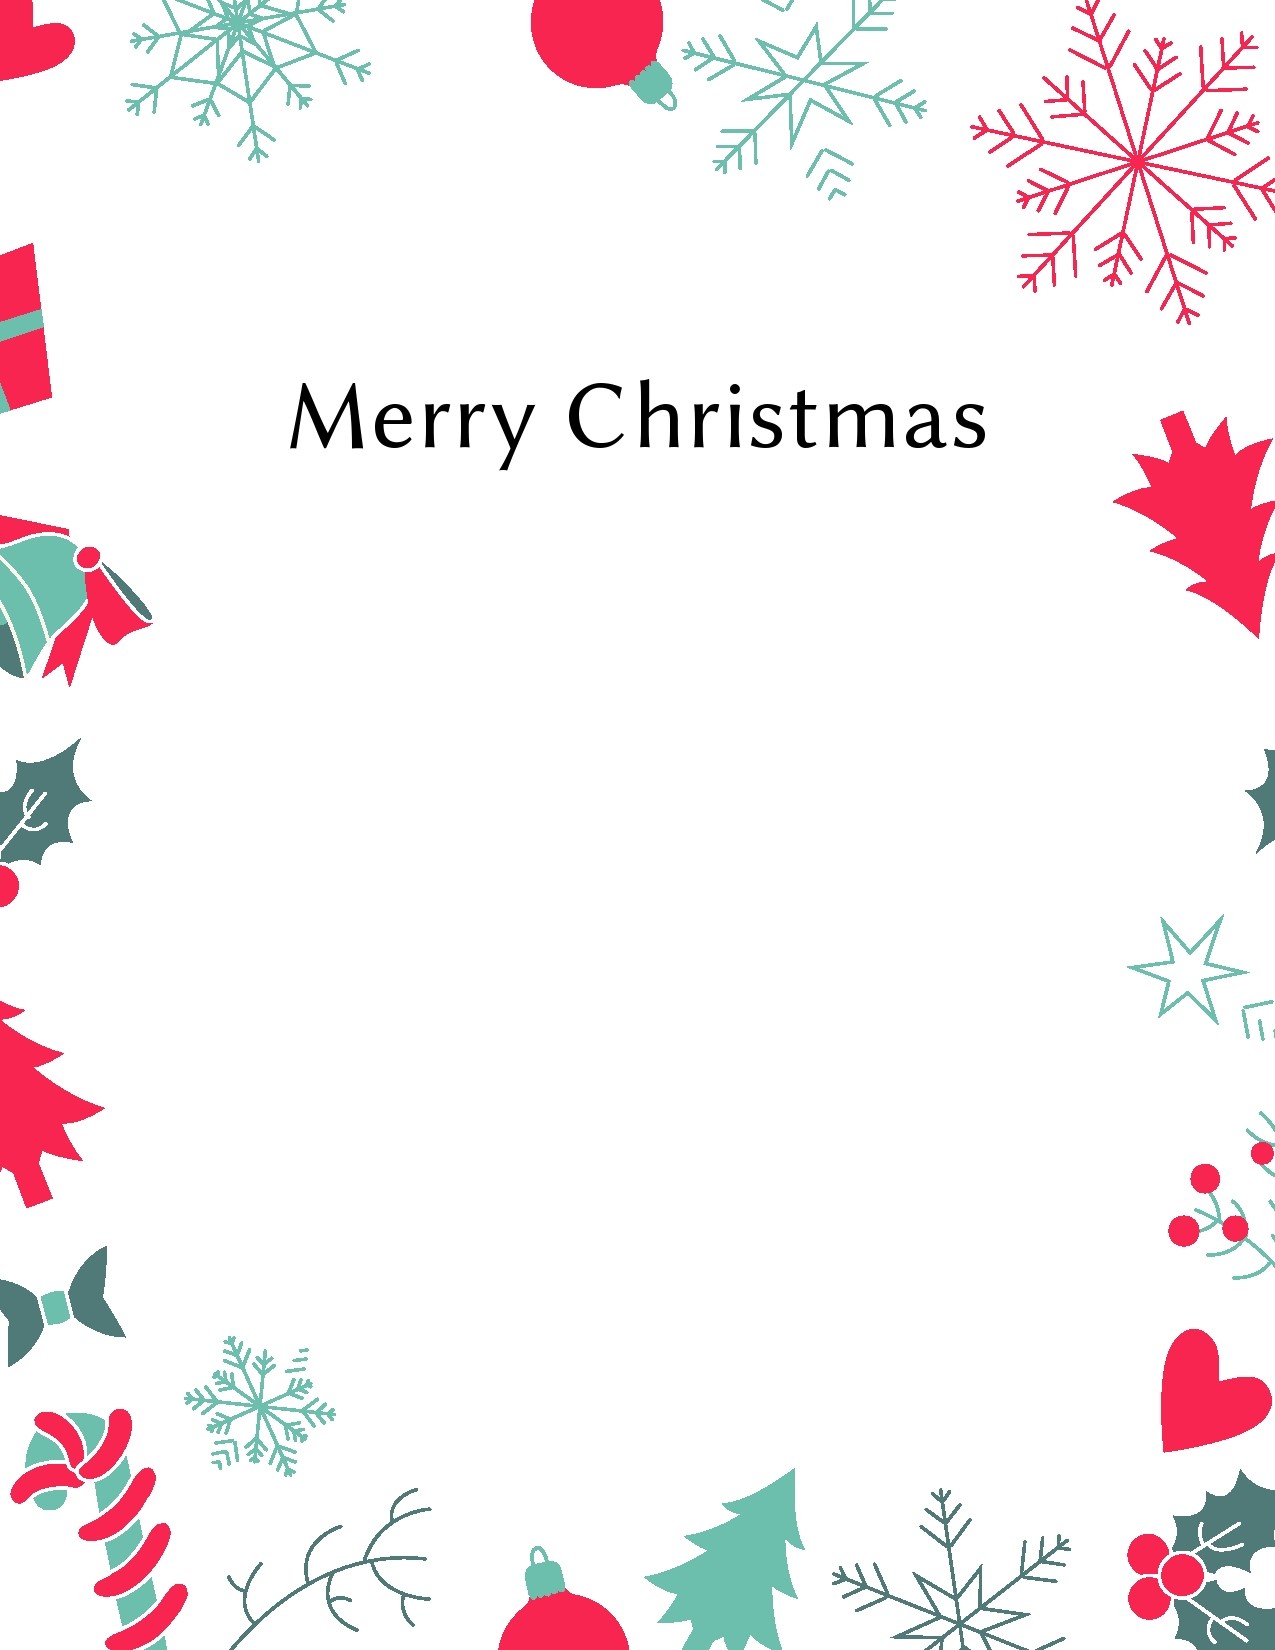 45 Printable Christmas Letter Templates [100 FREE] ᐅ TemplateLab